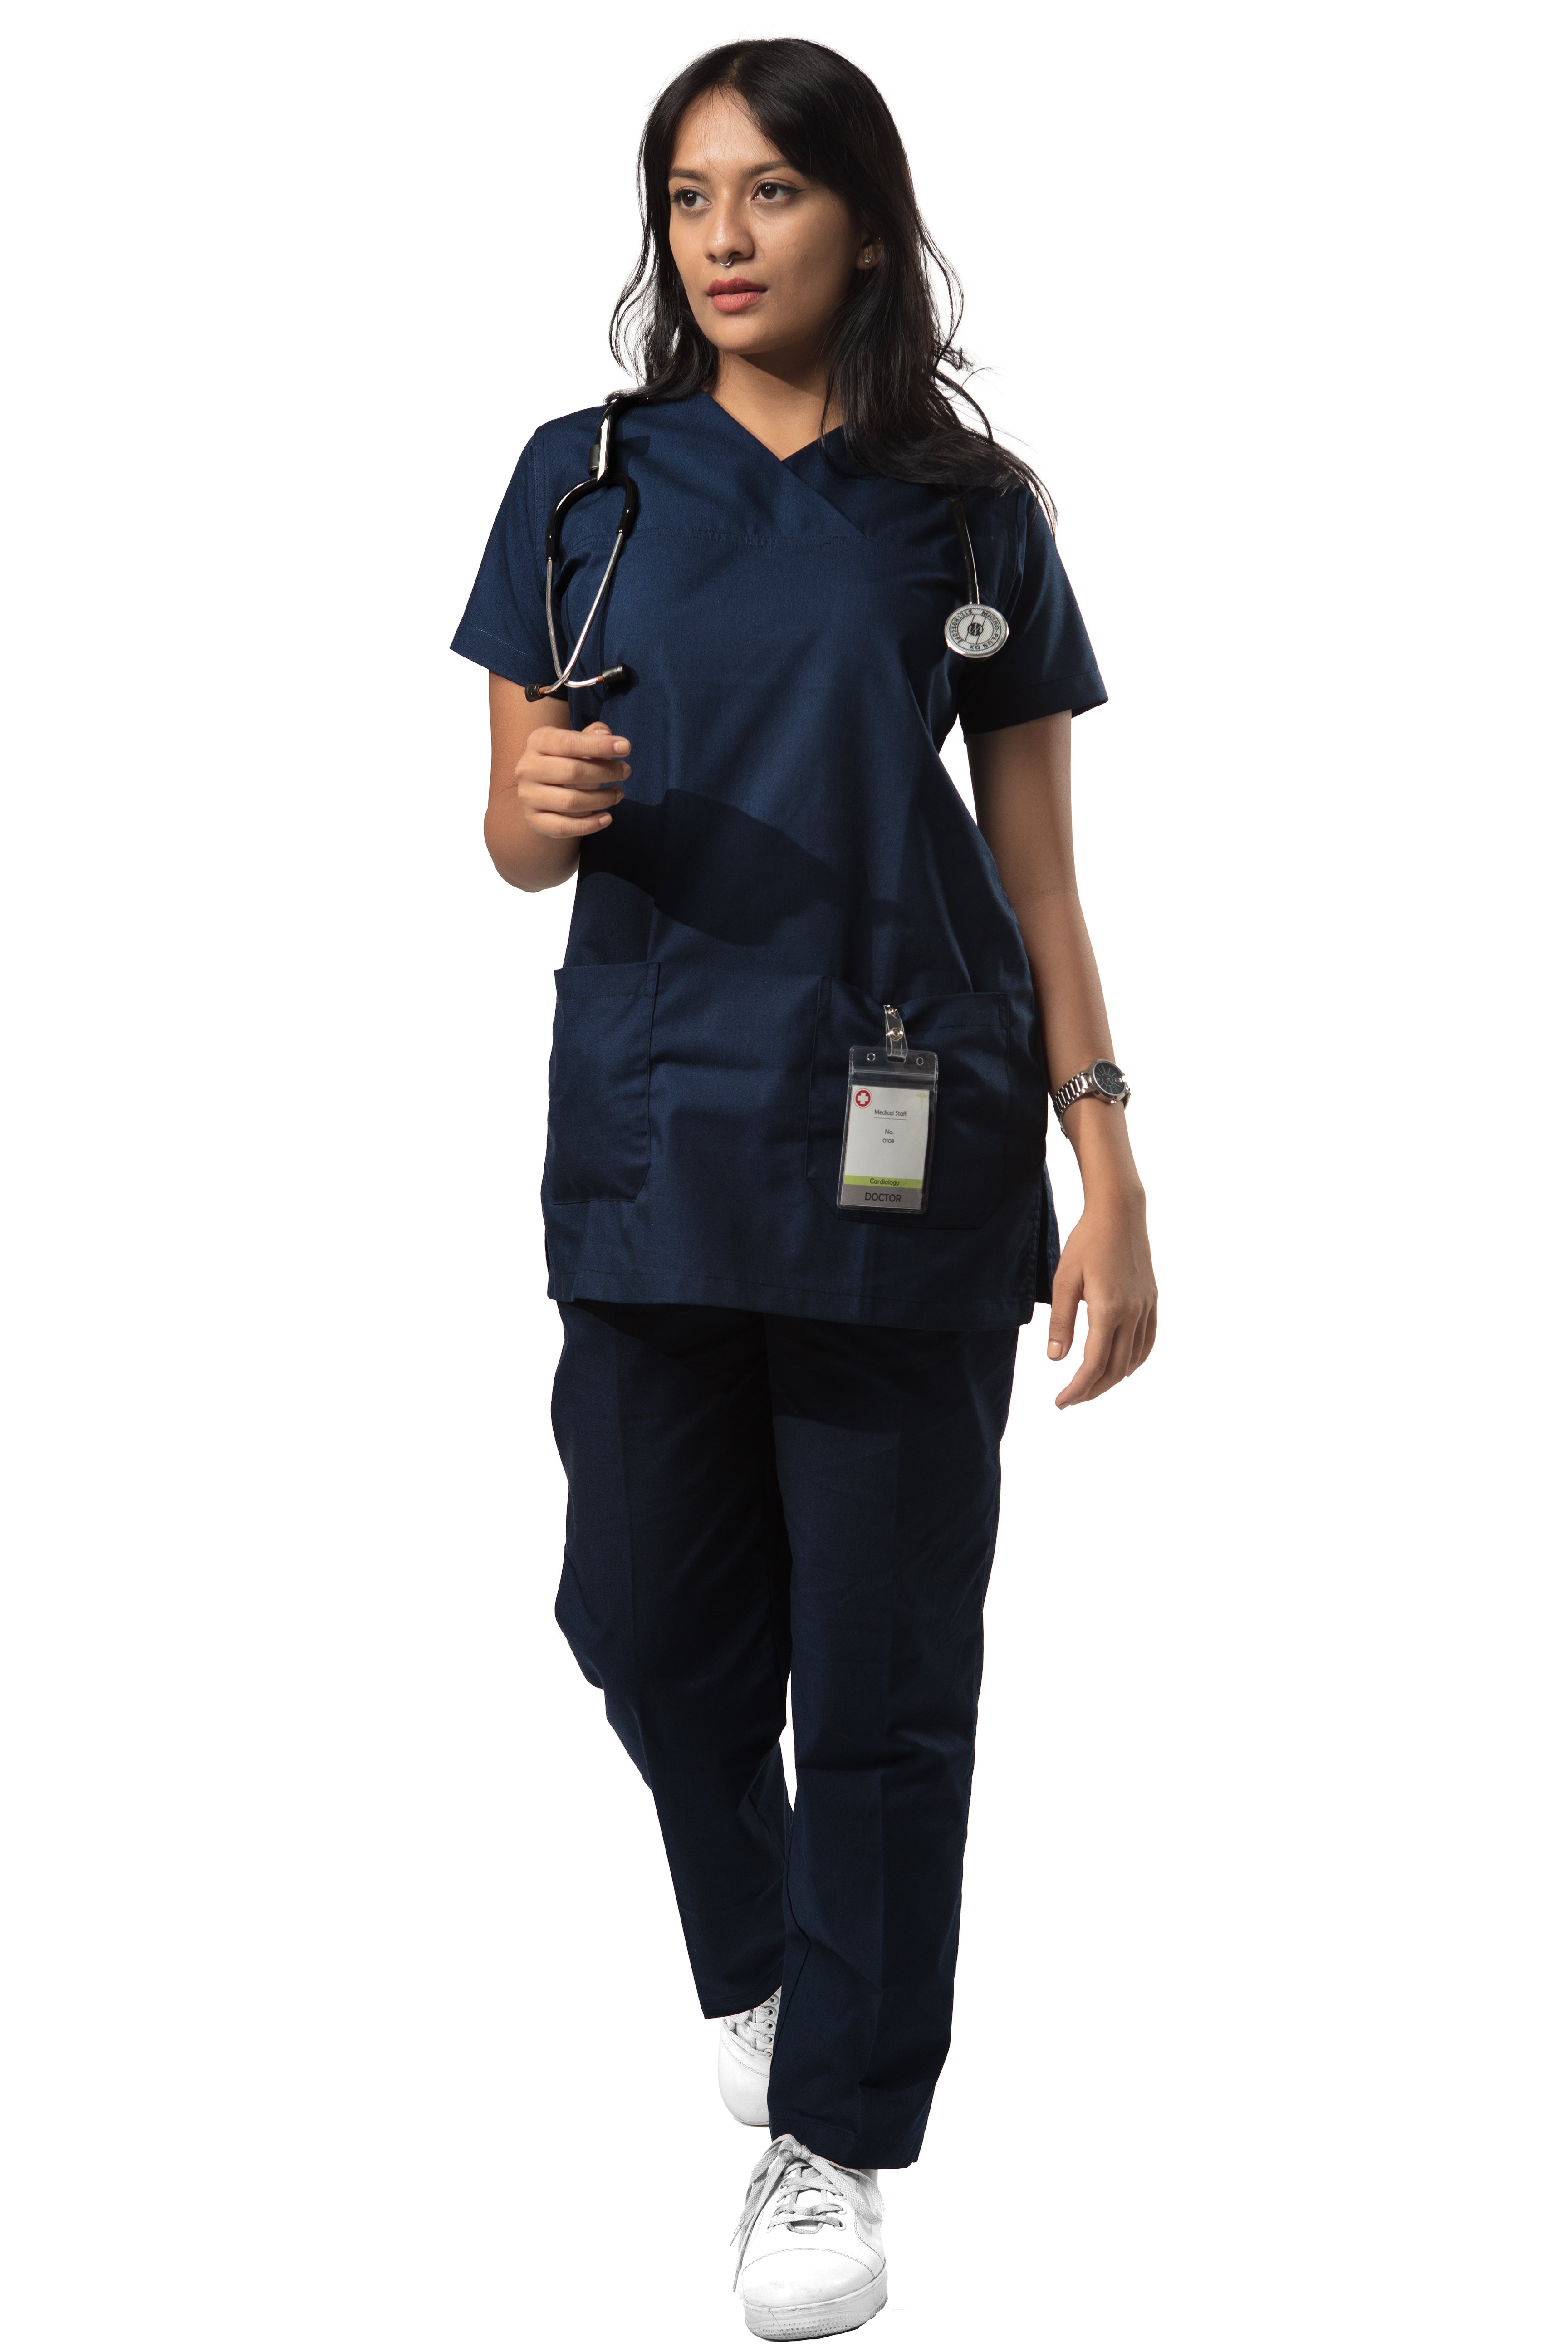 UNIFORM CRAFT Women’s Designer Scrub Suits DSDX01 || 6 pocket scrubs, cargo  pockets | Ideal for doctors, dentists, vets, nurses & healthcare